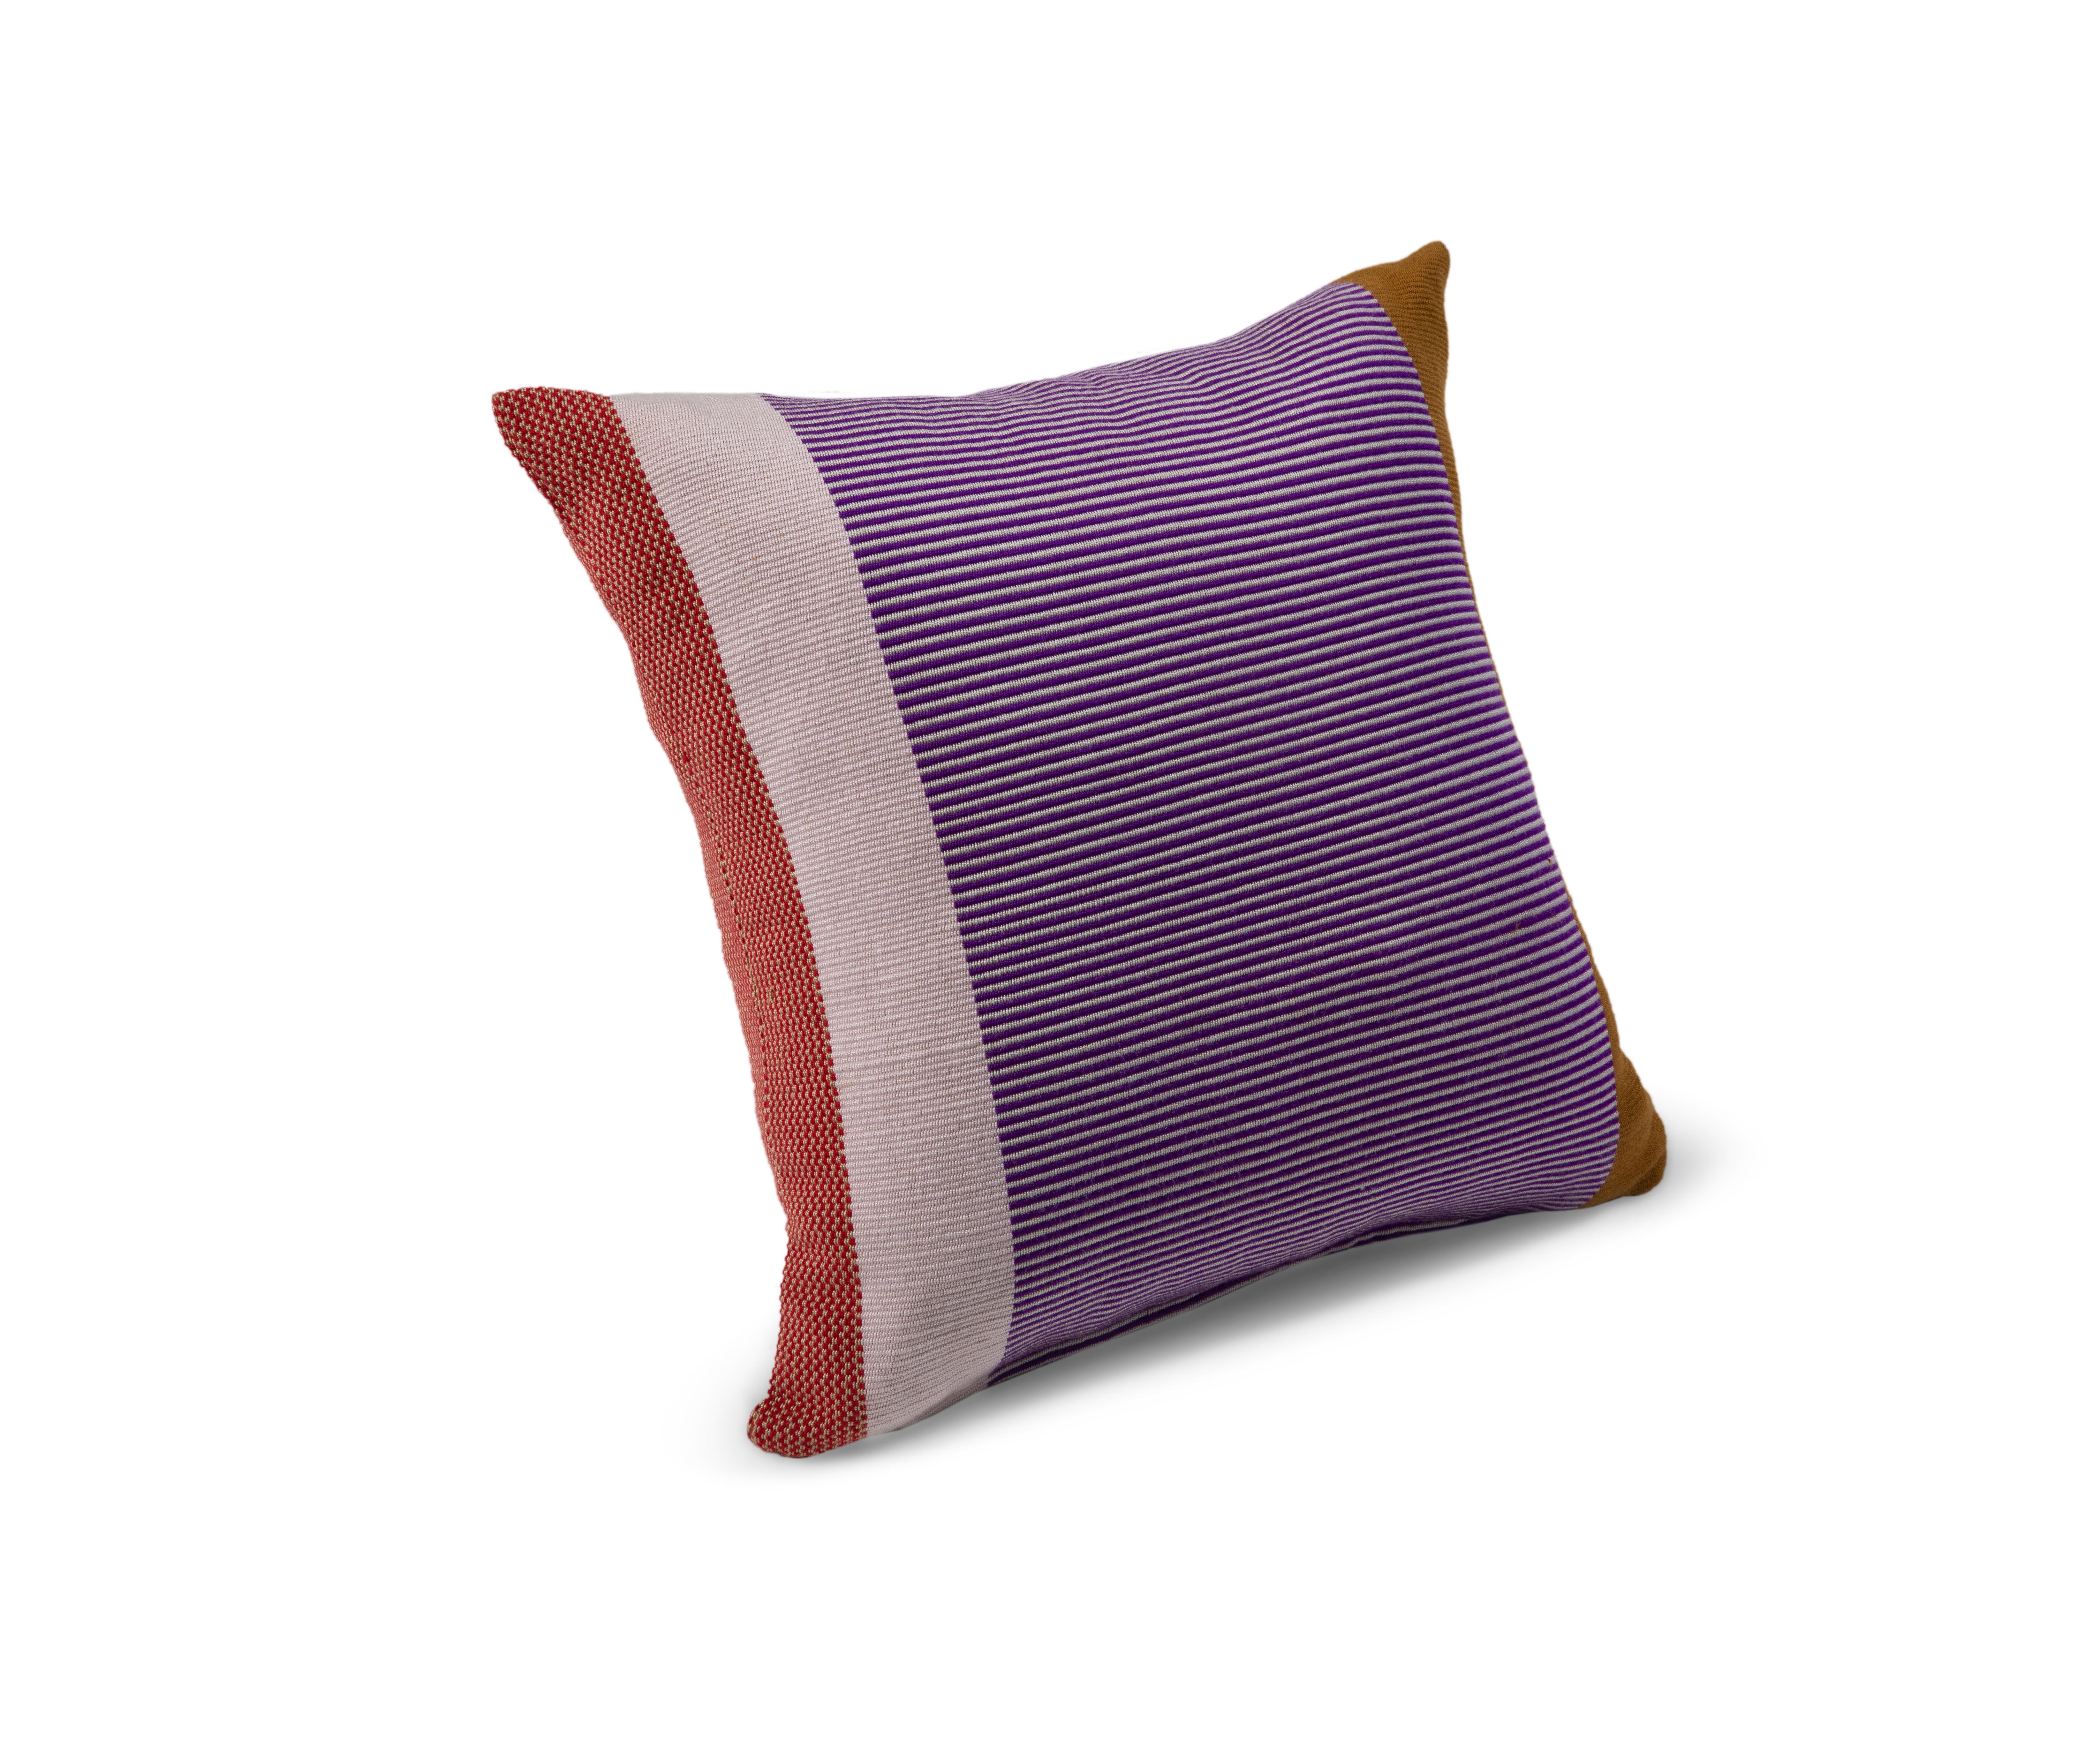 Maraca Pillow 3 by Sebastian Herkner
Materials: 100% Cotton. 
Technique: Hand-woven in Colombia. 
Dimensions: W 80 x H 80 cm 
Available in colors: verde/ purpura/ rojo, naranja/ dorado/ rojo, dorado/ purpura/ rojo.

With their strong